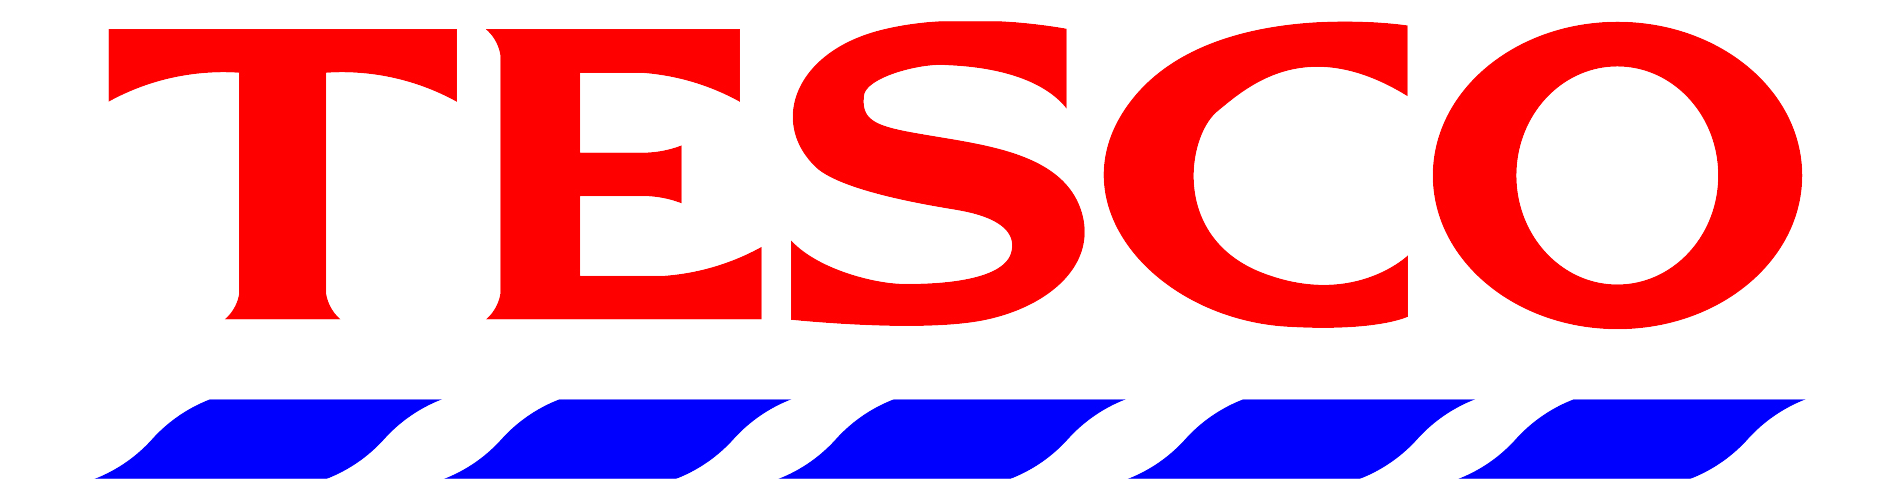 Logo Text Tesco Area Retail Free Transparent Image HD PNG Image